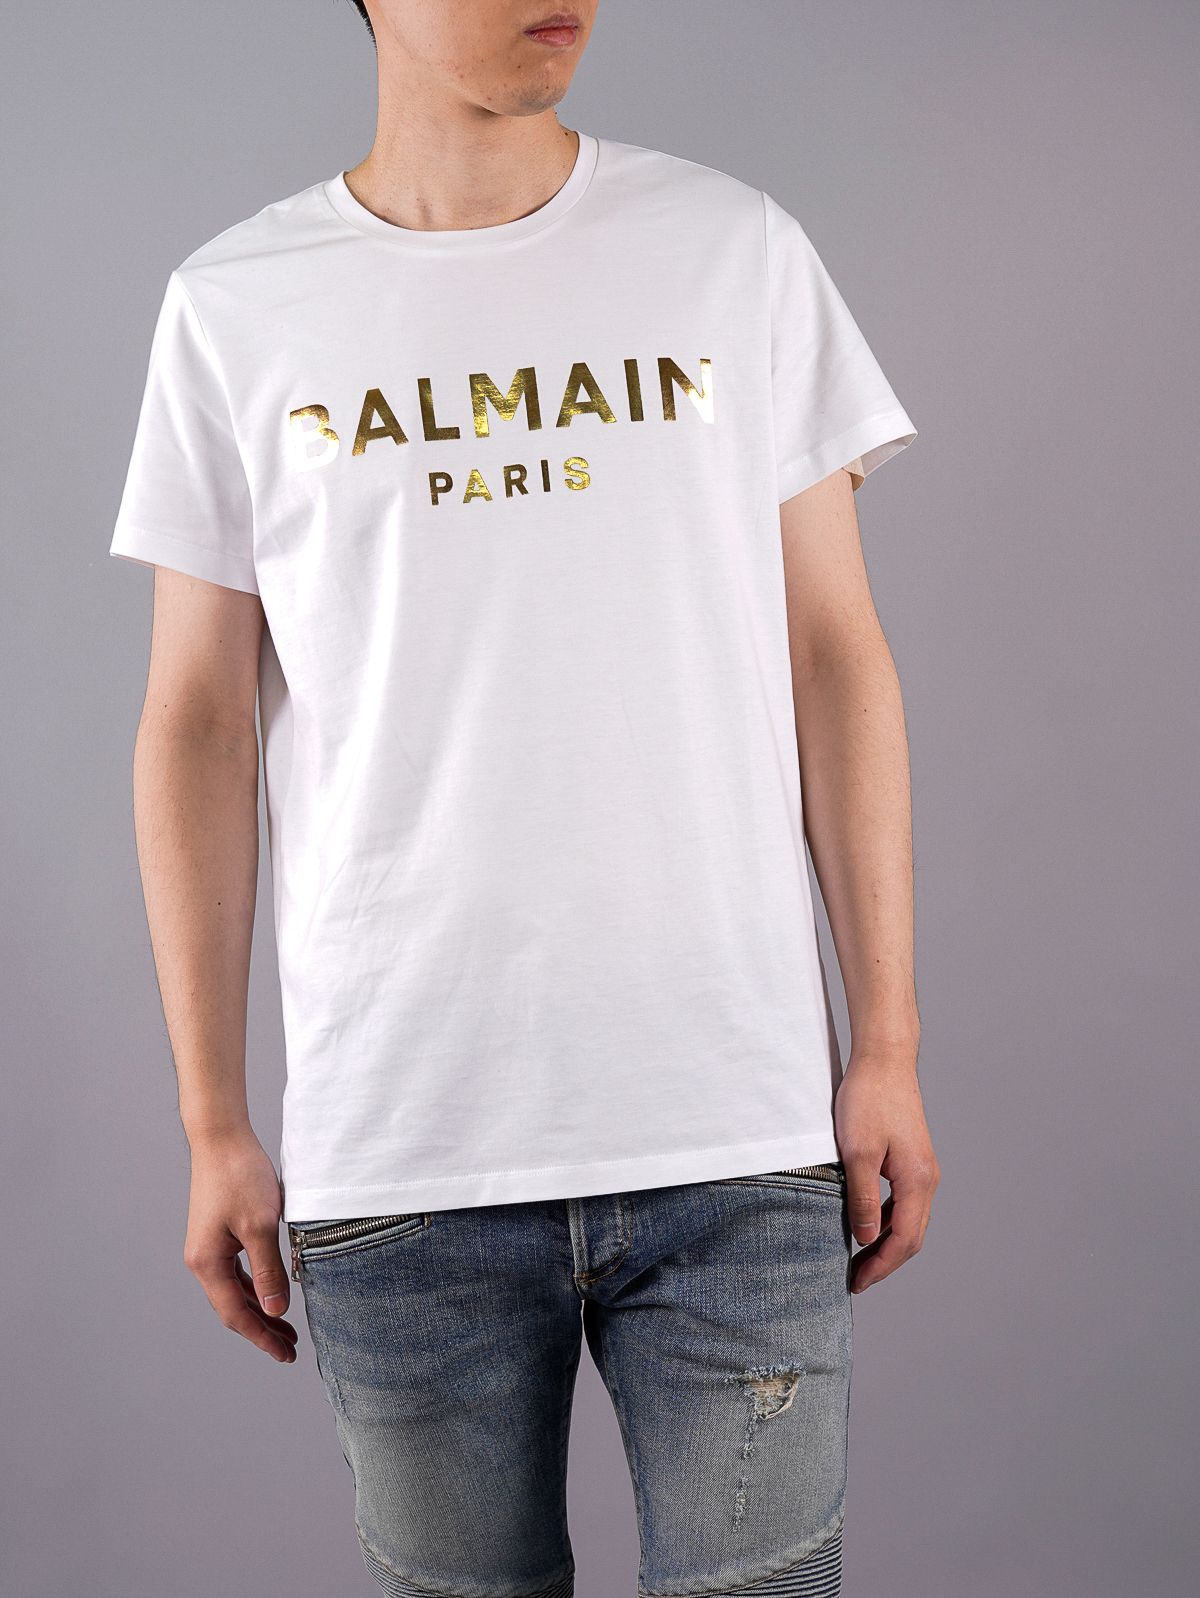 BALMAIN - White Cotton T-shirt Gold Balmain Paris Metallic Logo